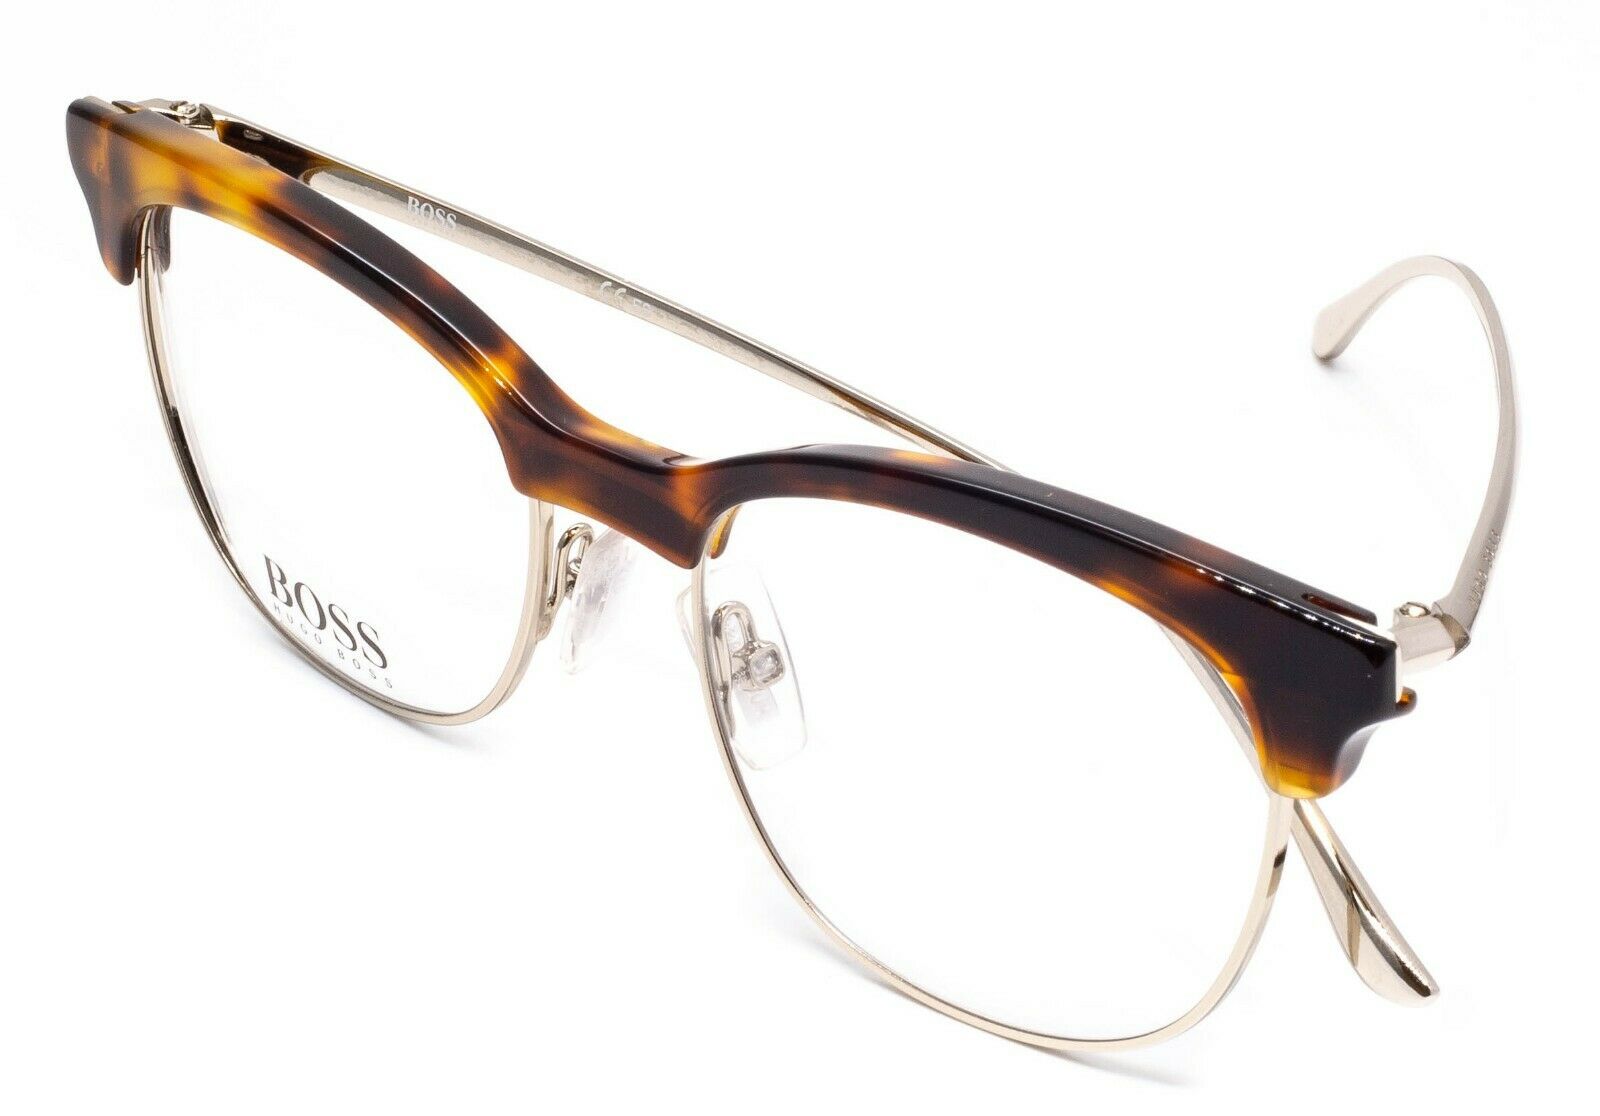 HUGO BOSS 0948 086 51mm Eyewear FRAMES Glasses RX Optical Eyeglasses New - Italy